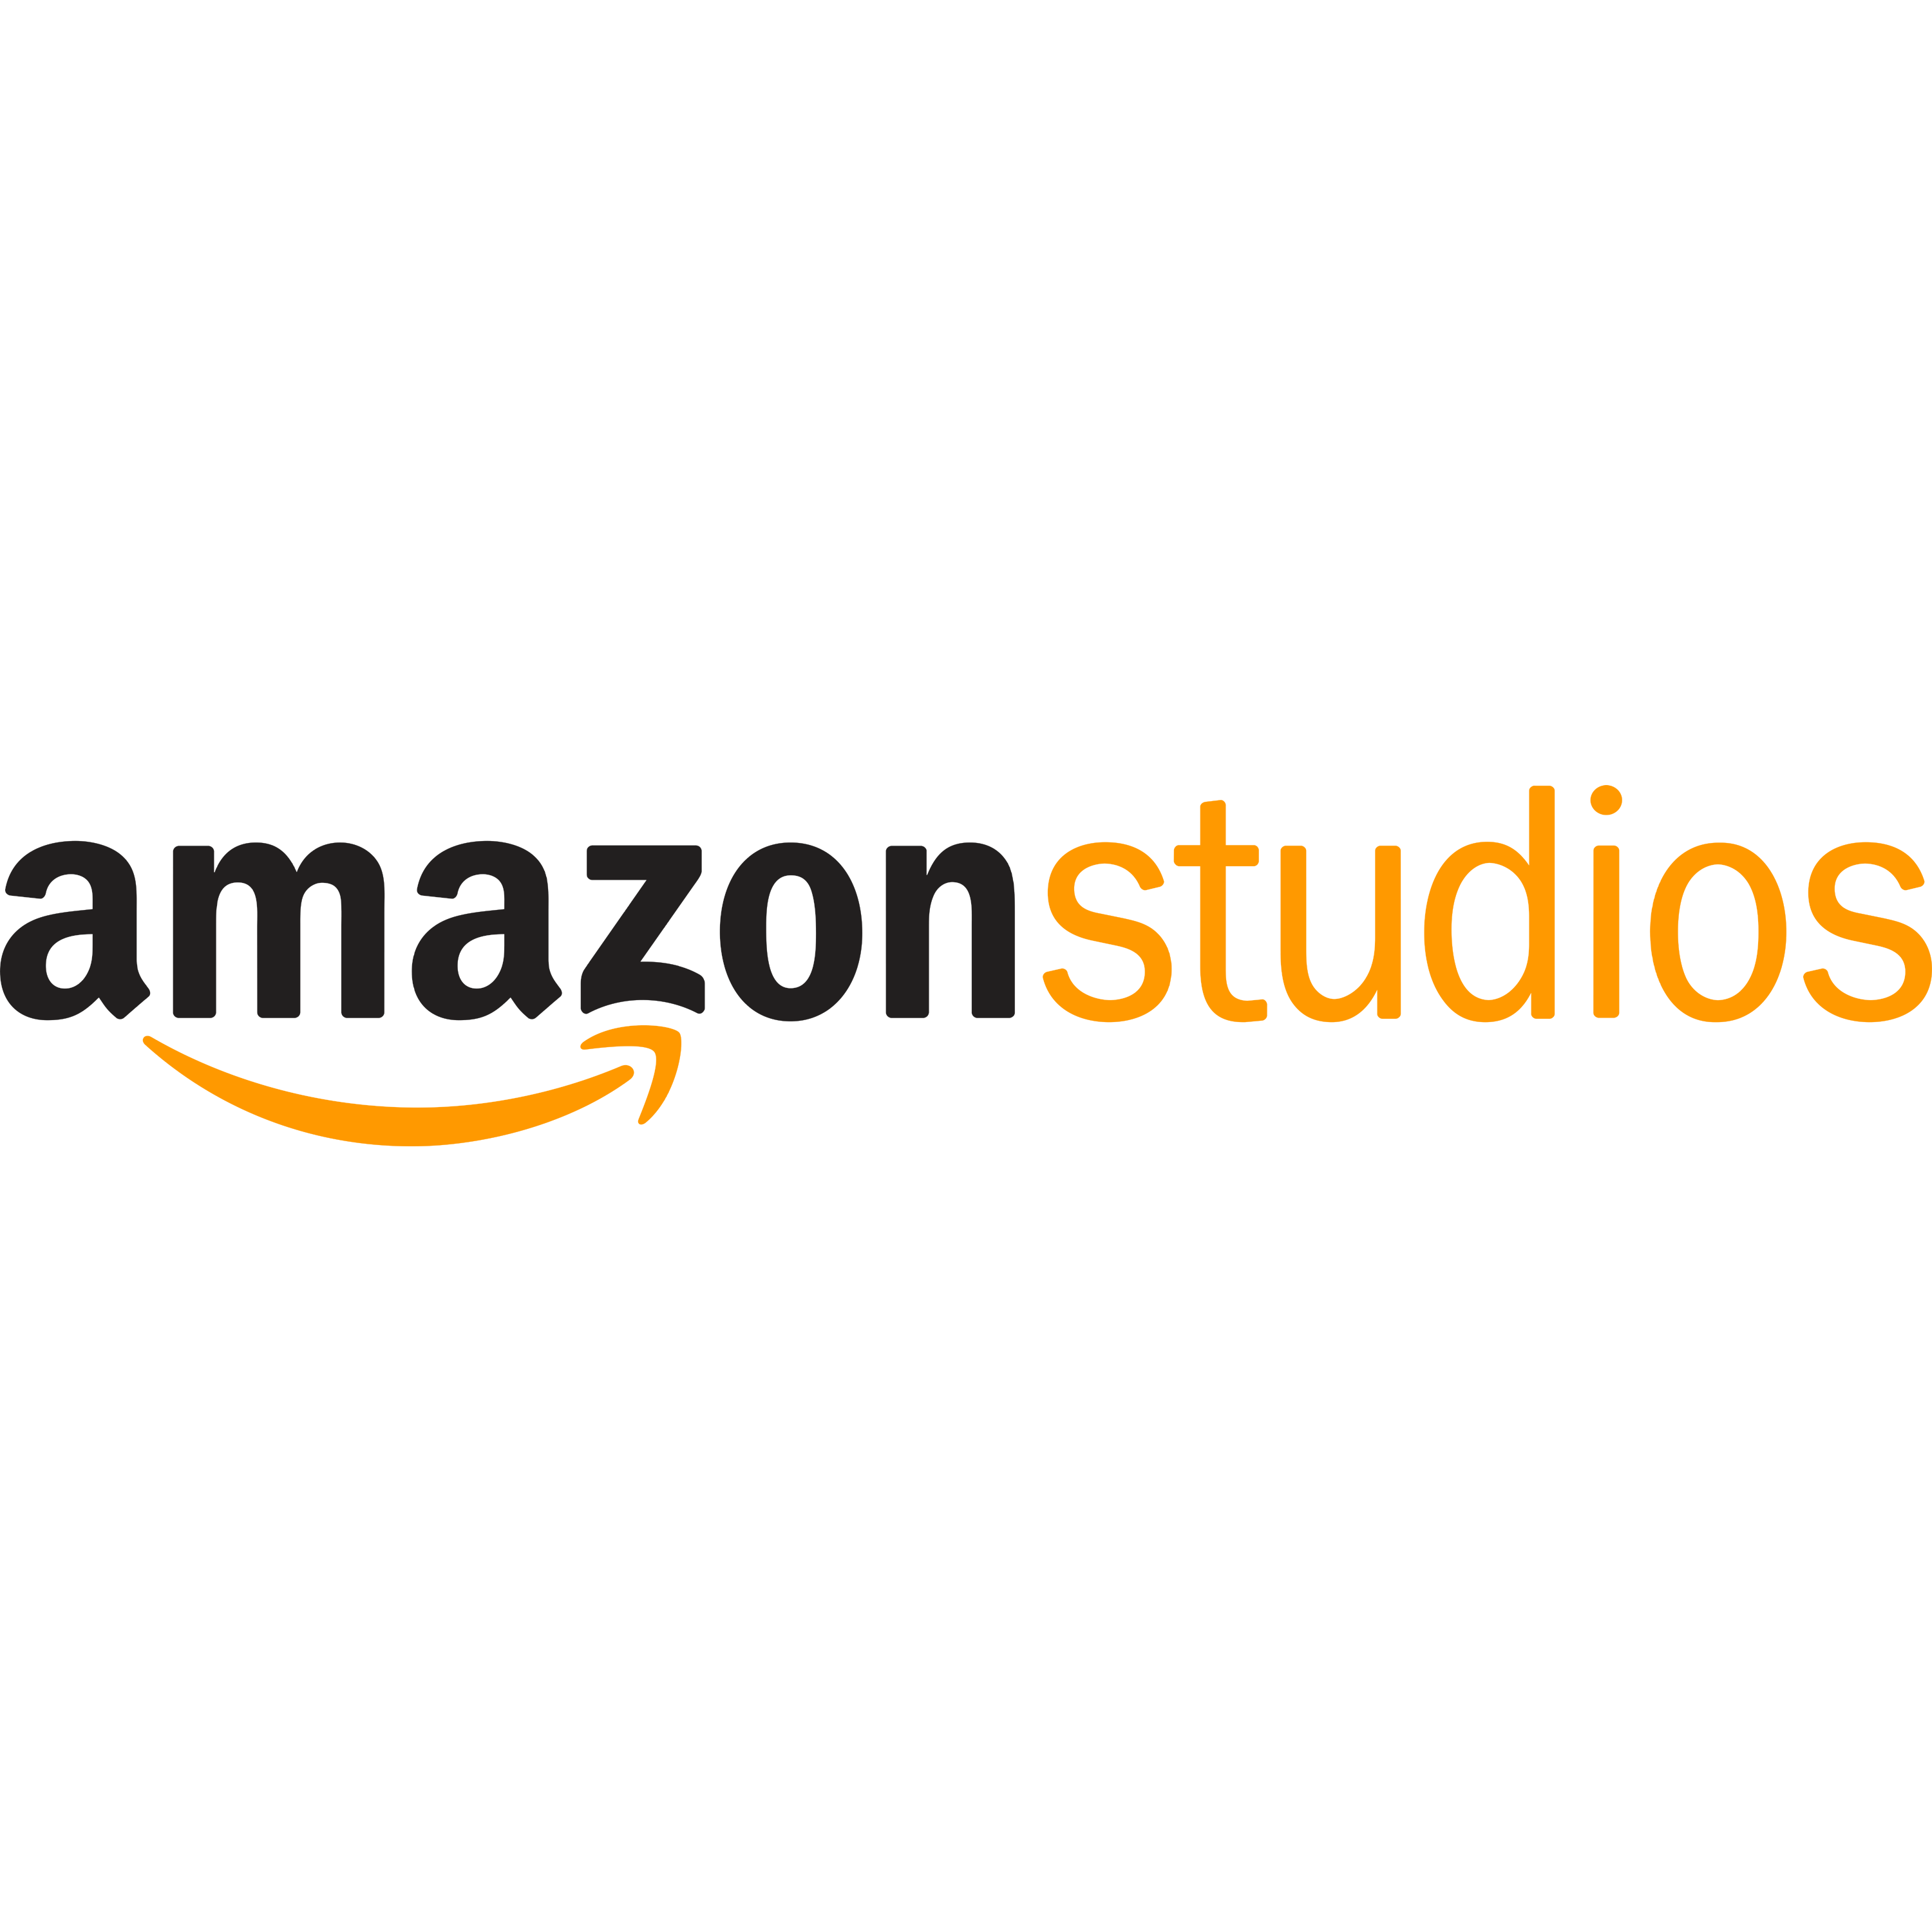 Amazon Studios Logo Transparent Image